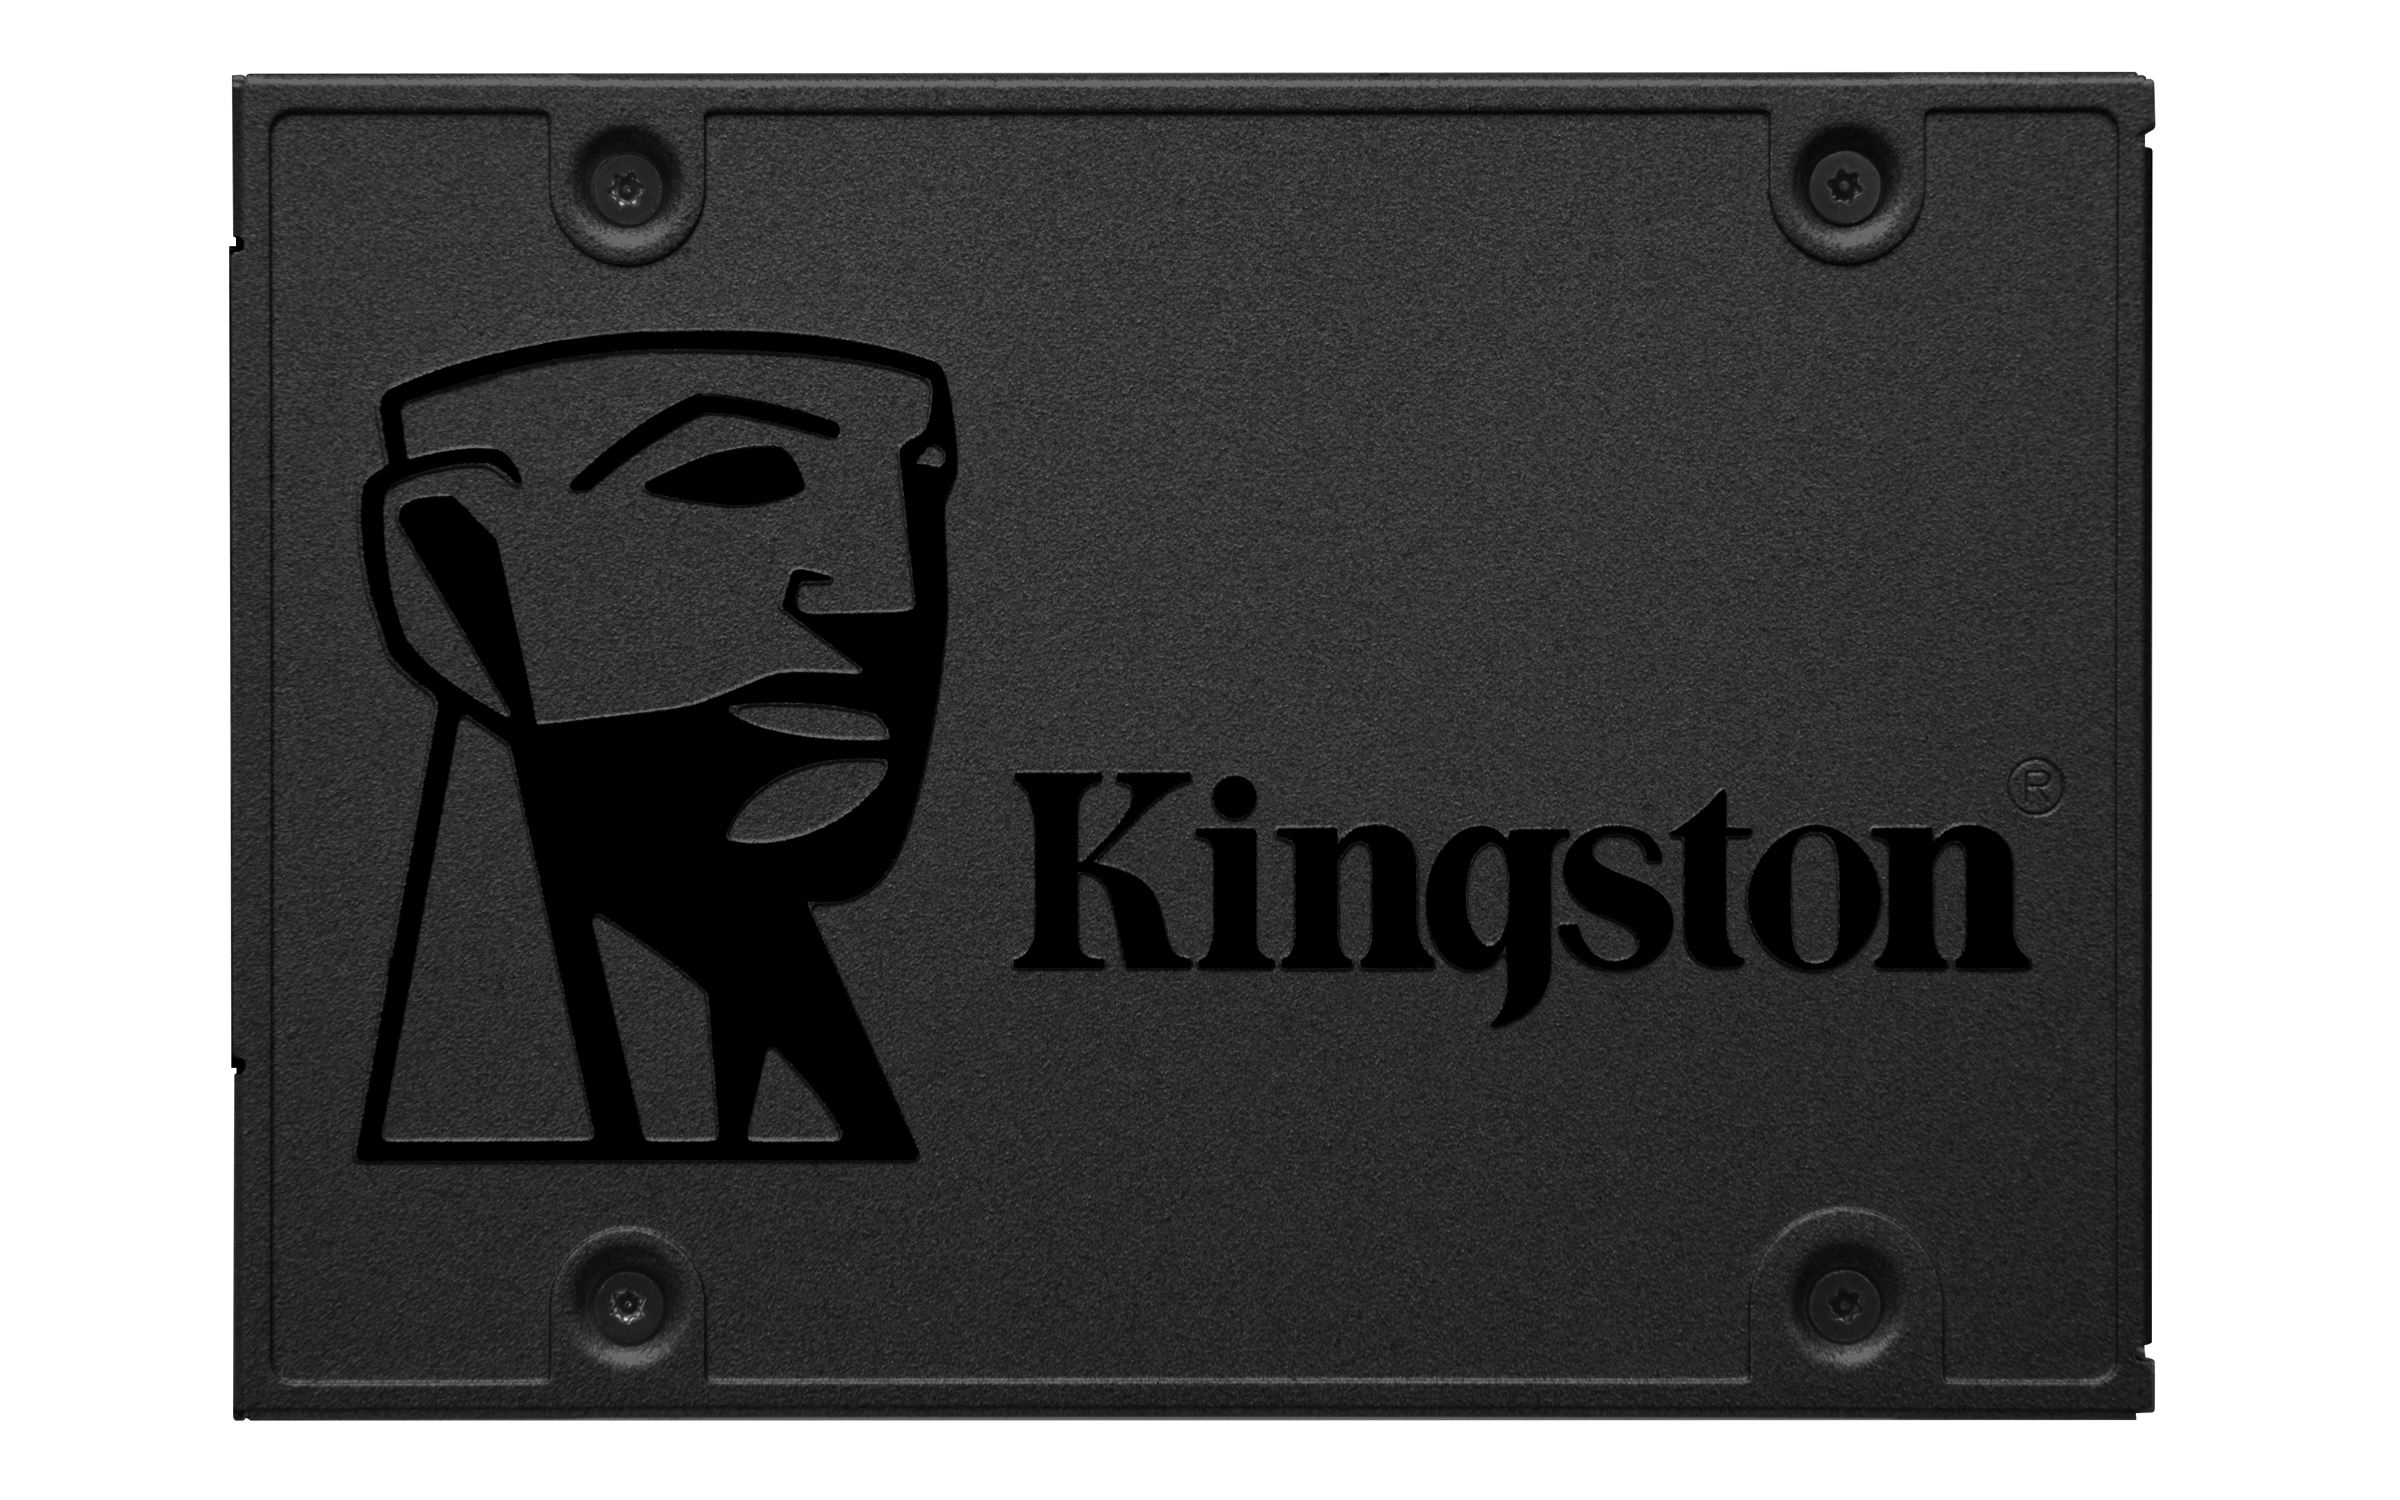 SSD Kingston Technology SA400S37/960G - 960 GB